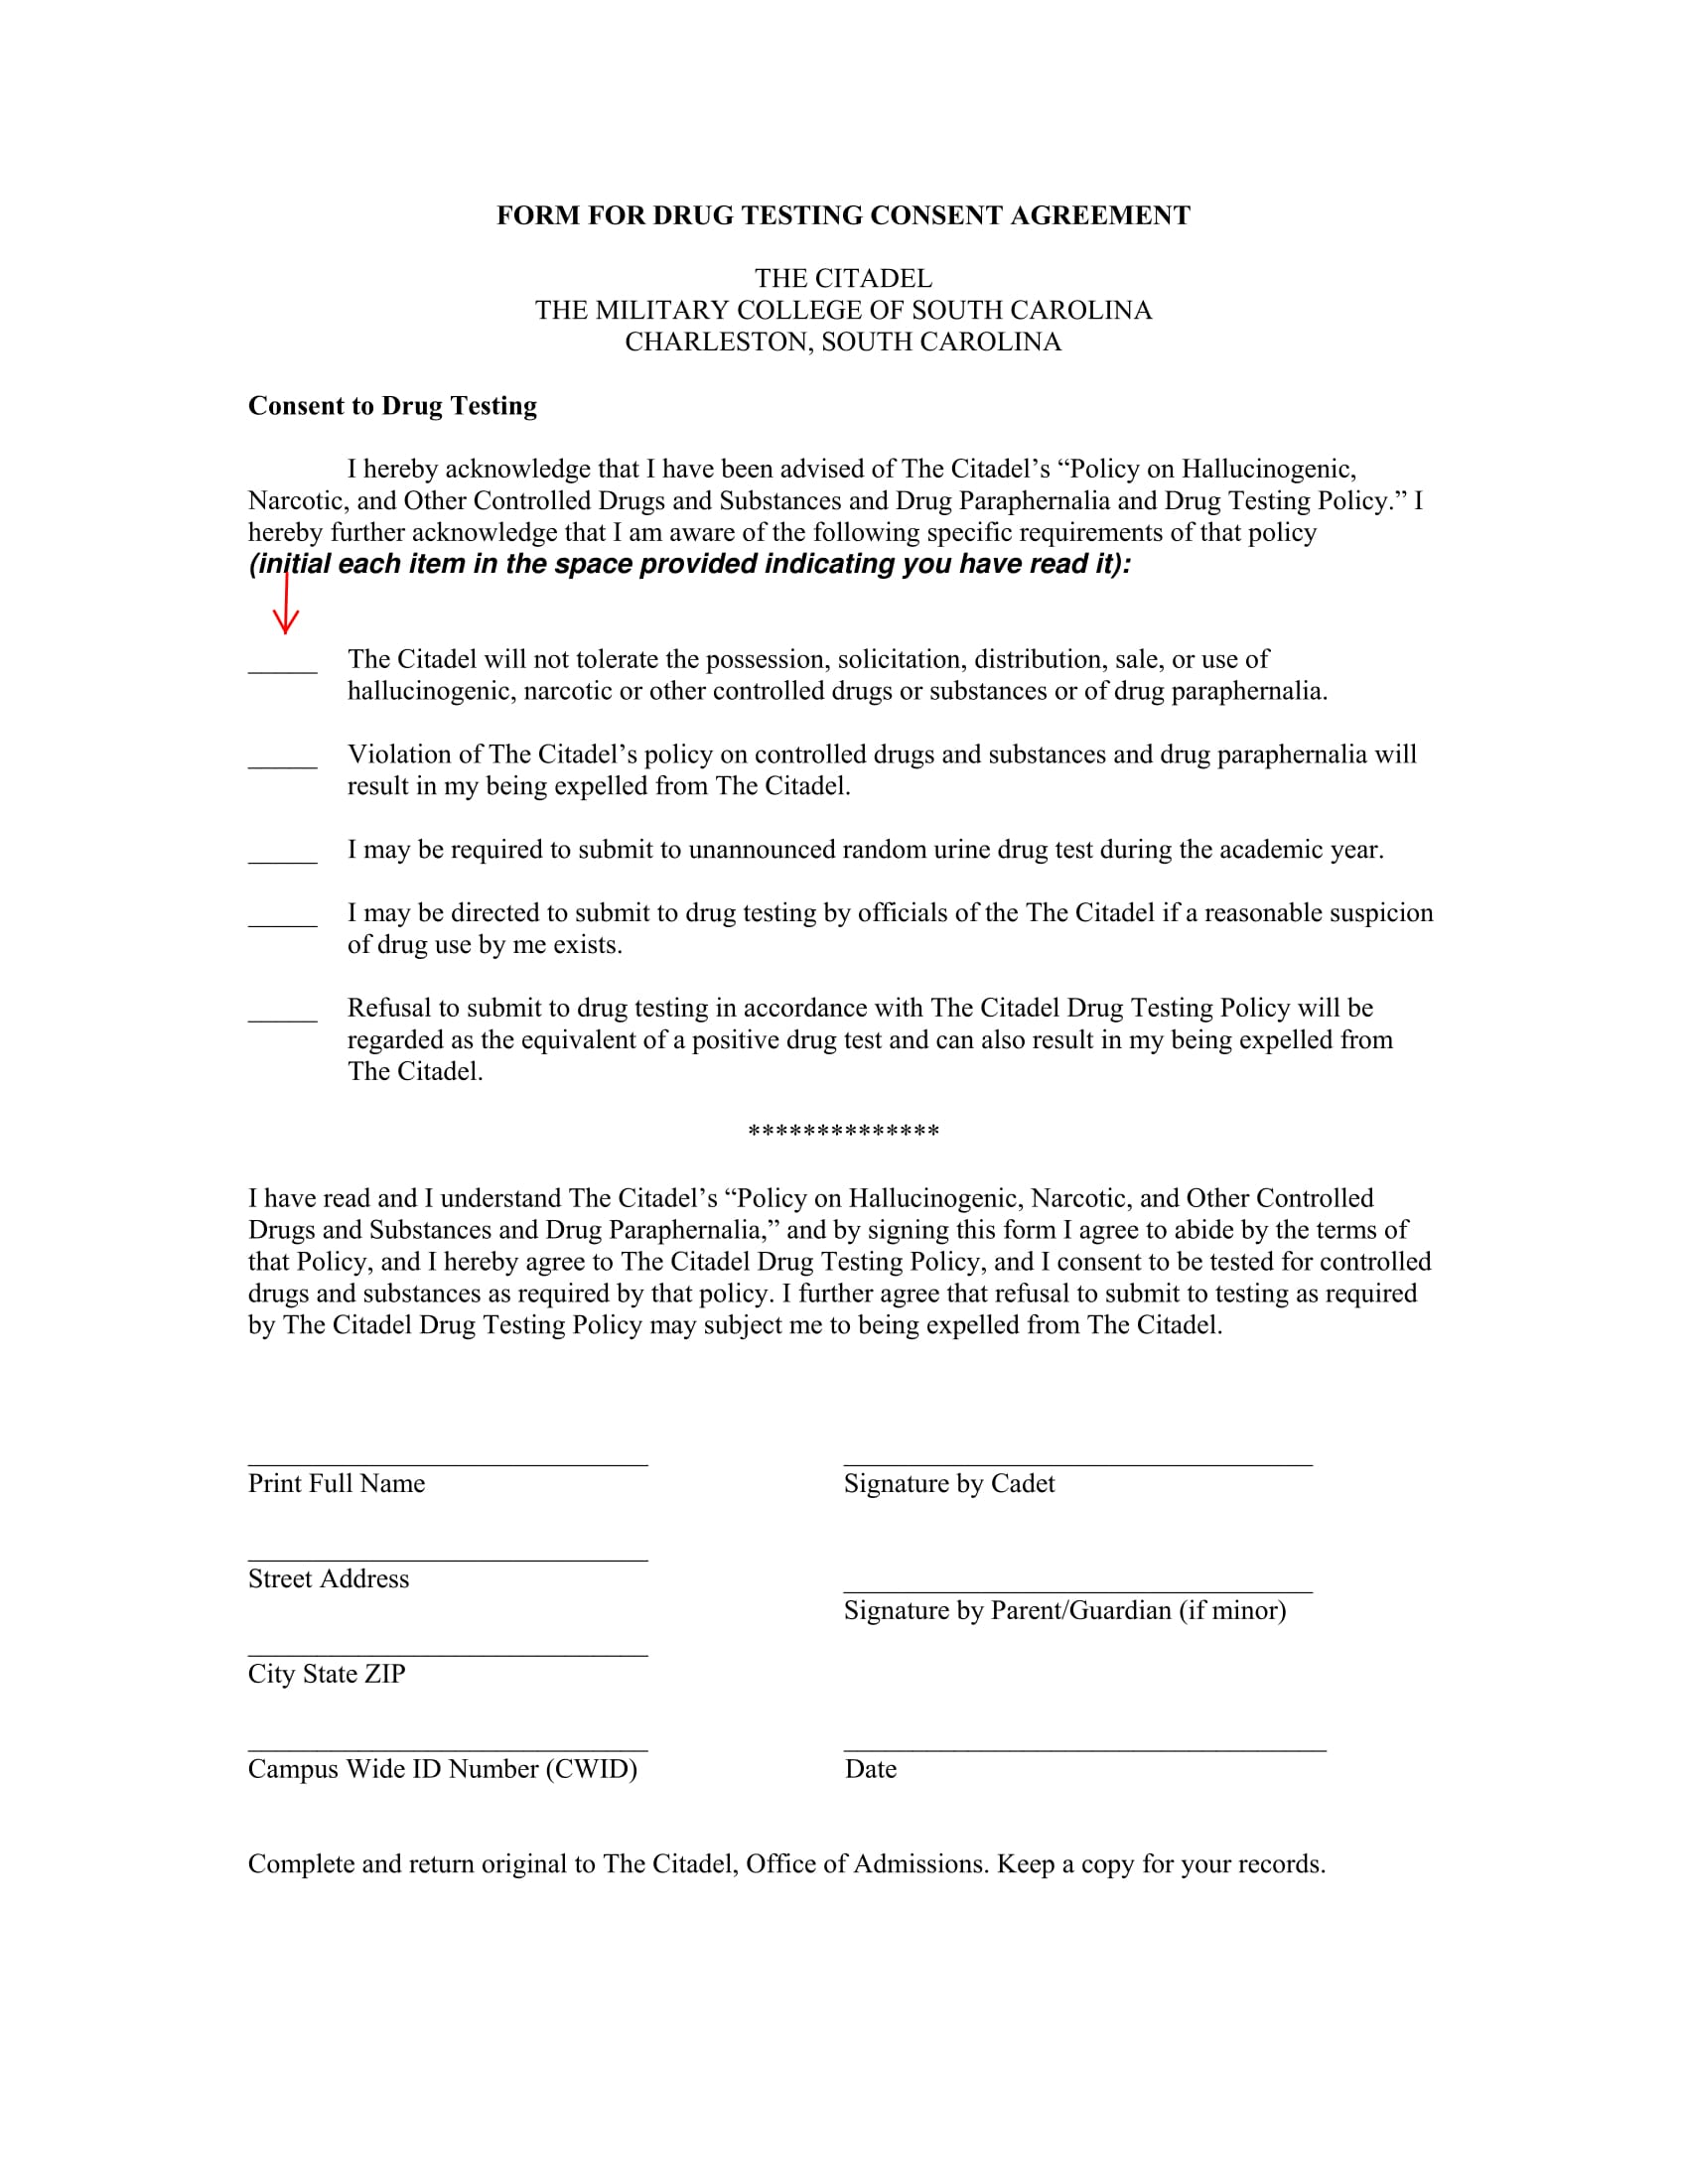 drug testing consent agreement form 1